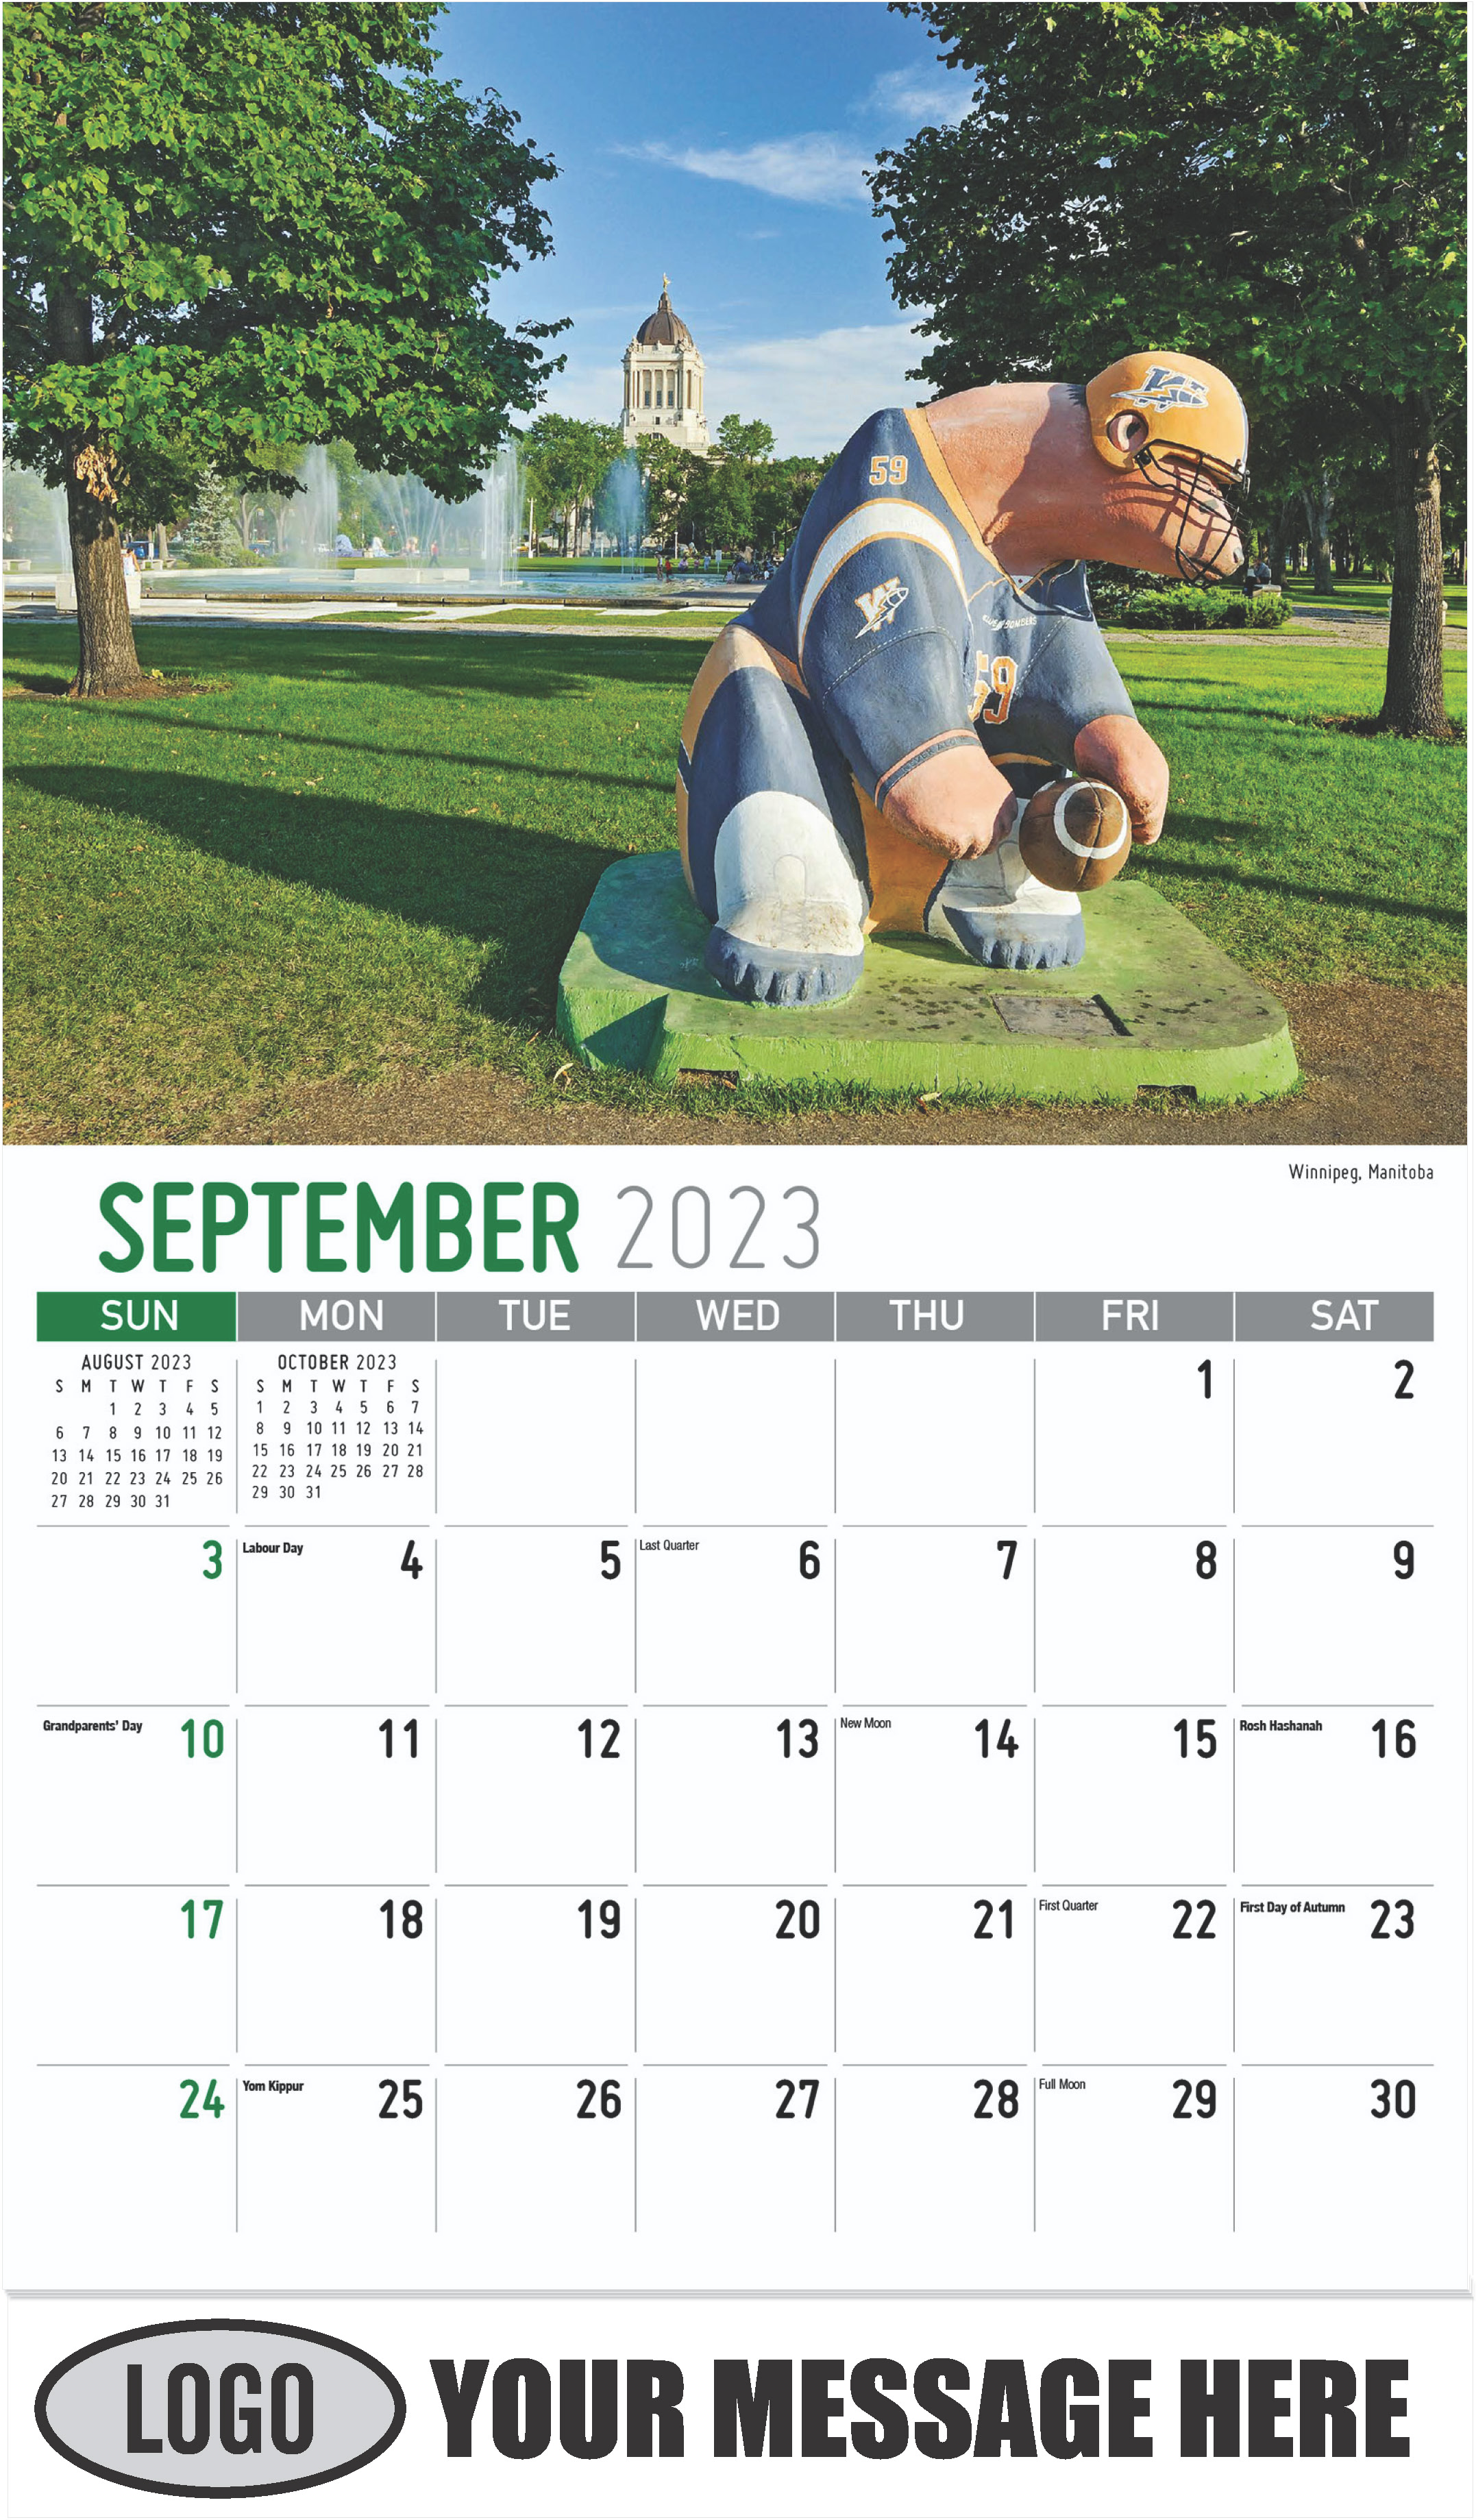 Winnipeg, Manitoba - September - Scenes of Western Canada 2023 Promotional Calendar